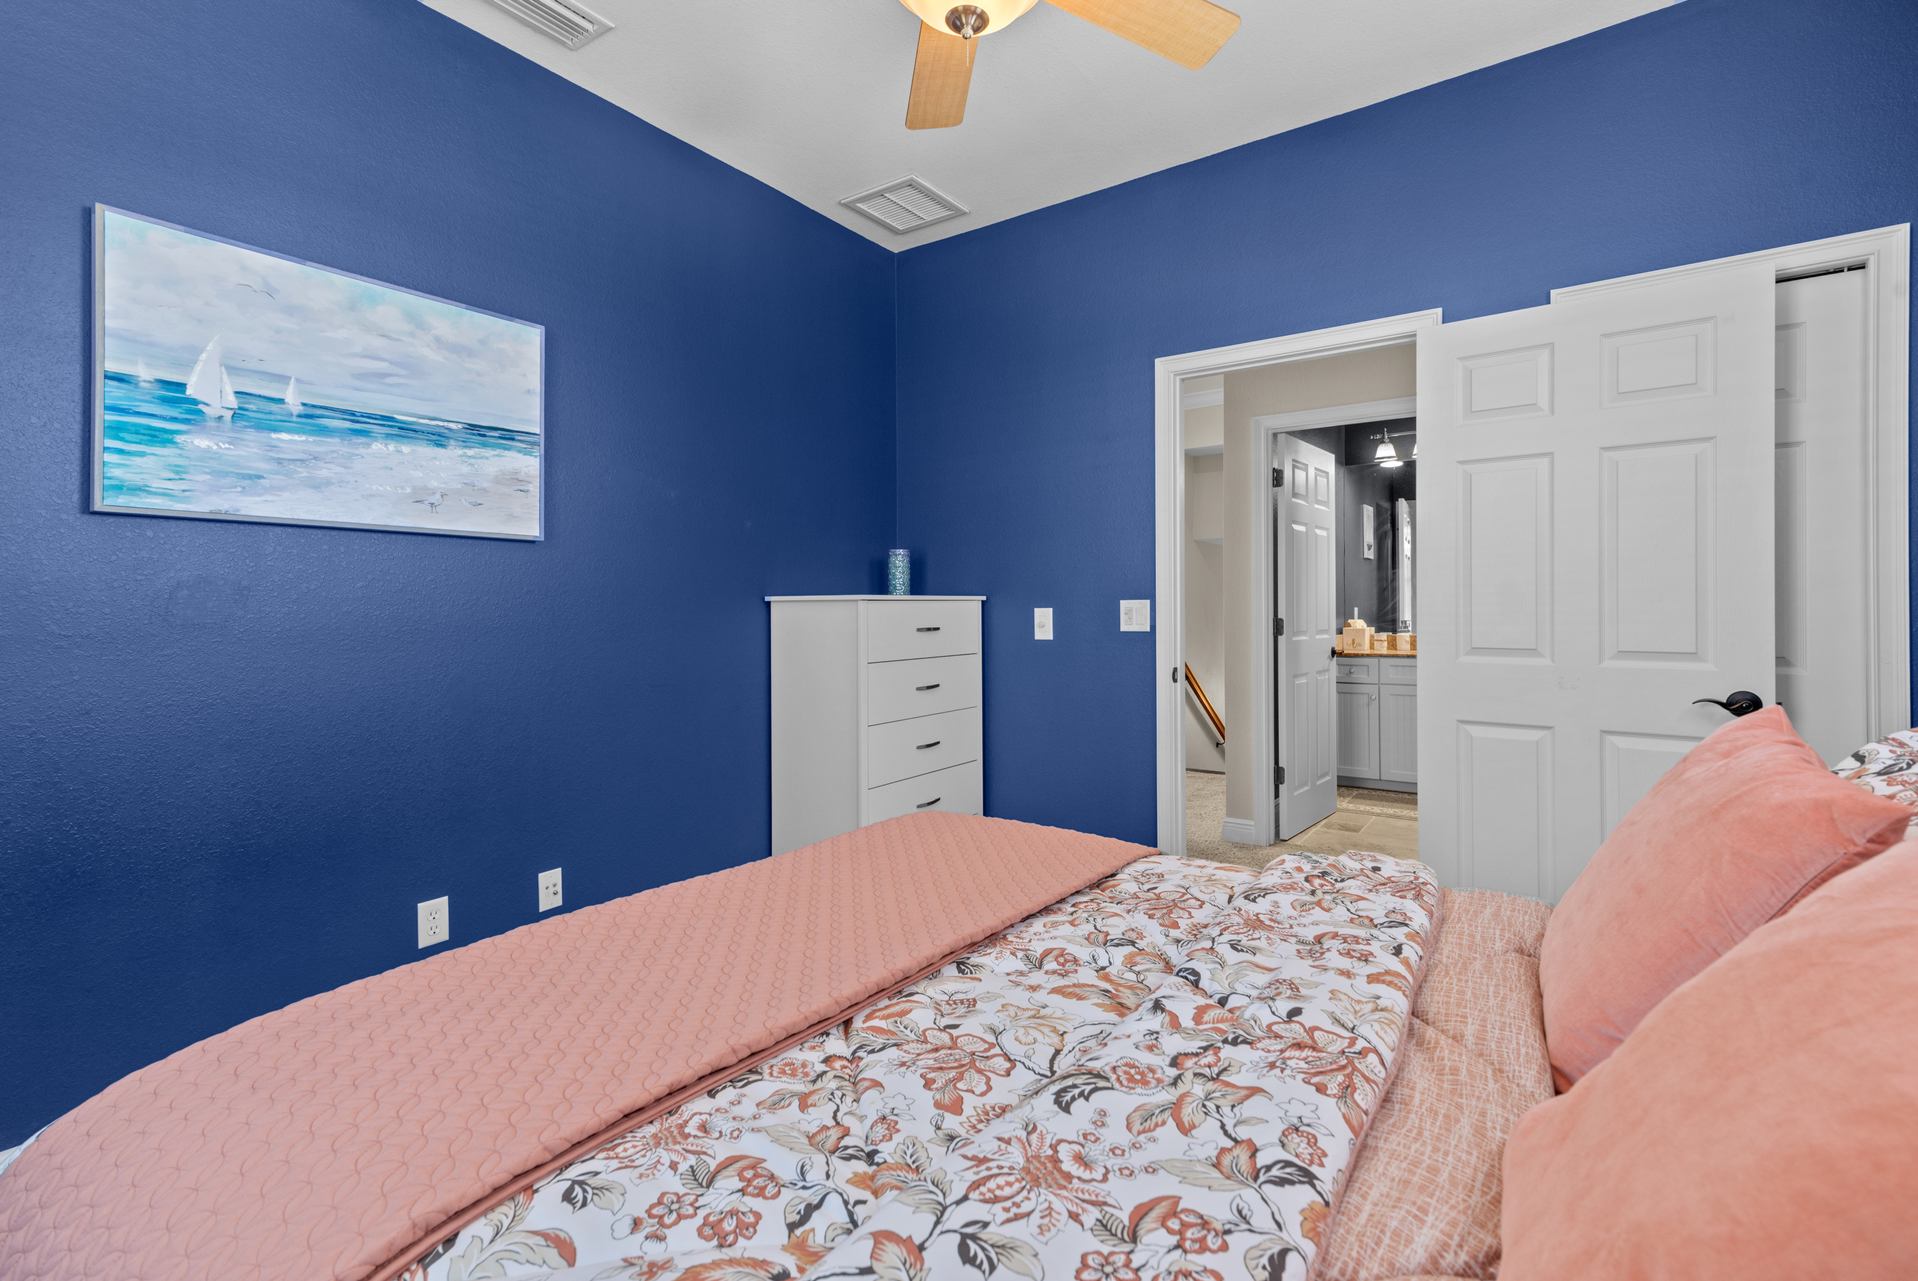 Bedrooms in Florida